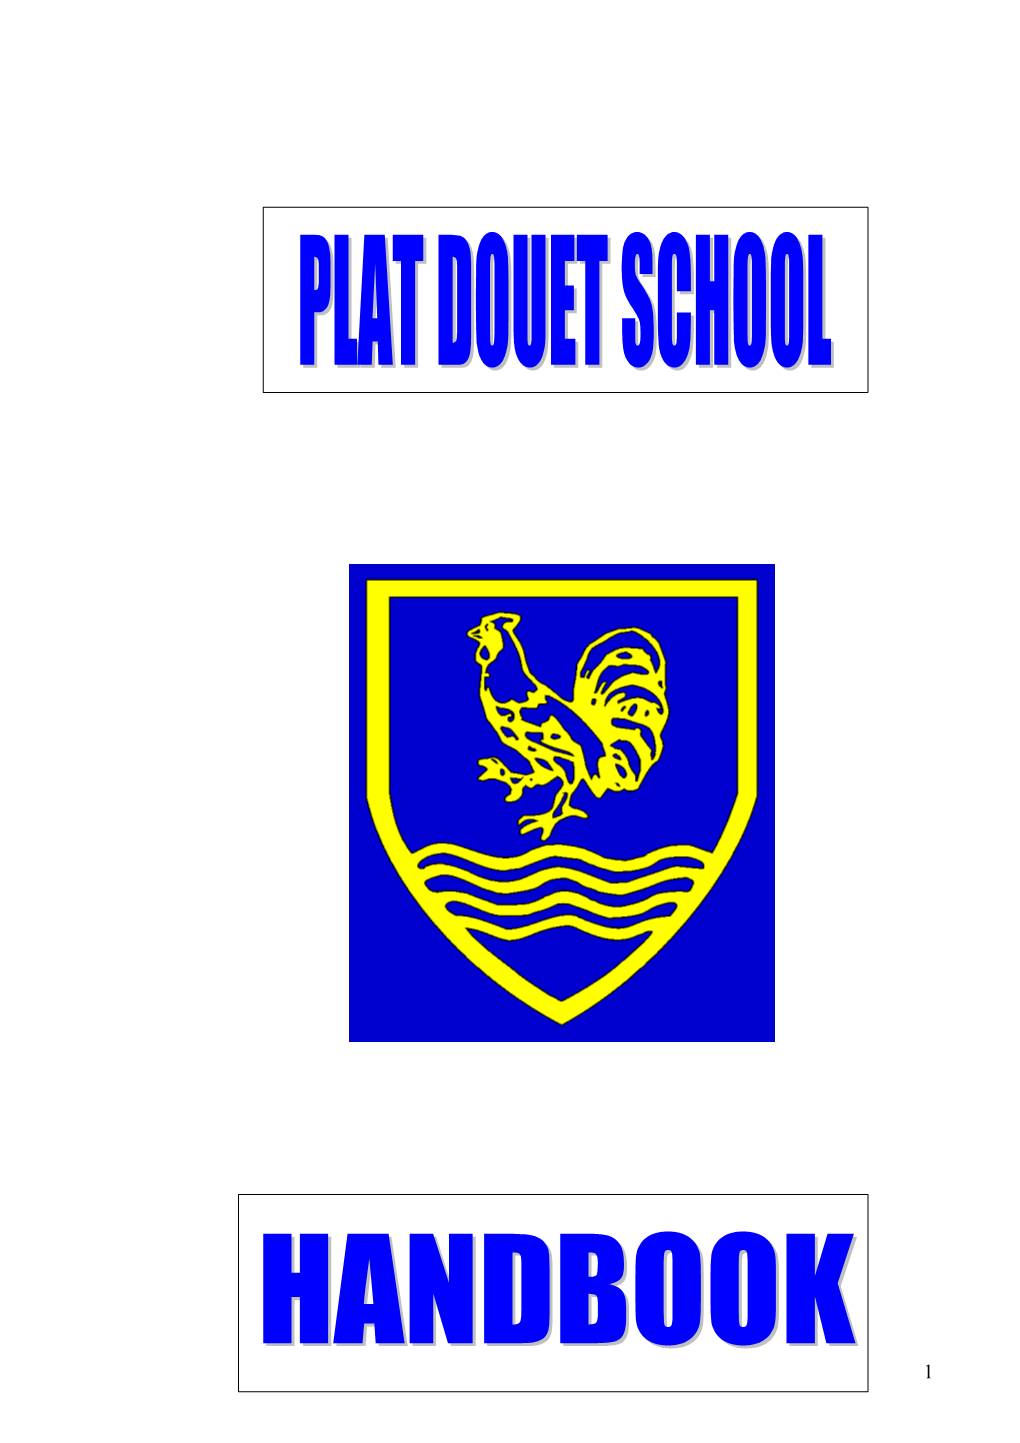 Address: Plat Douet Primary School